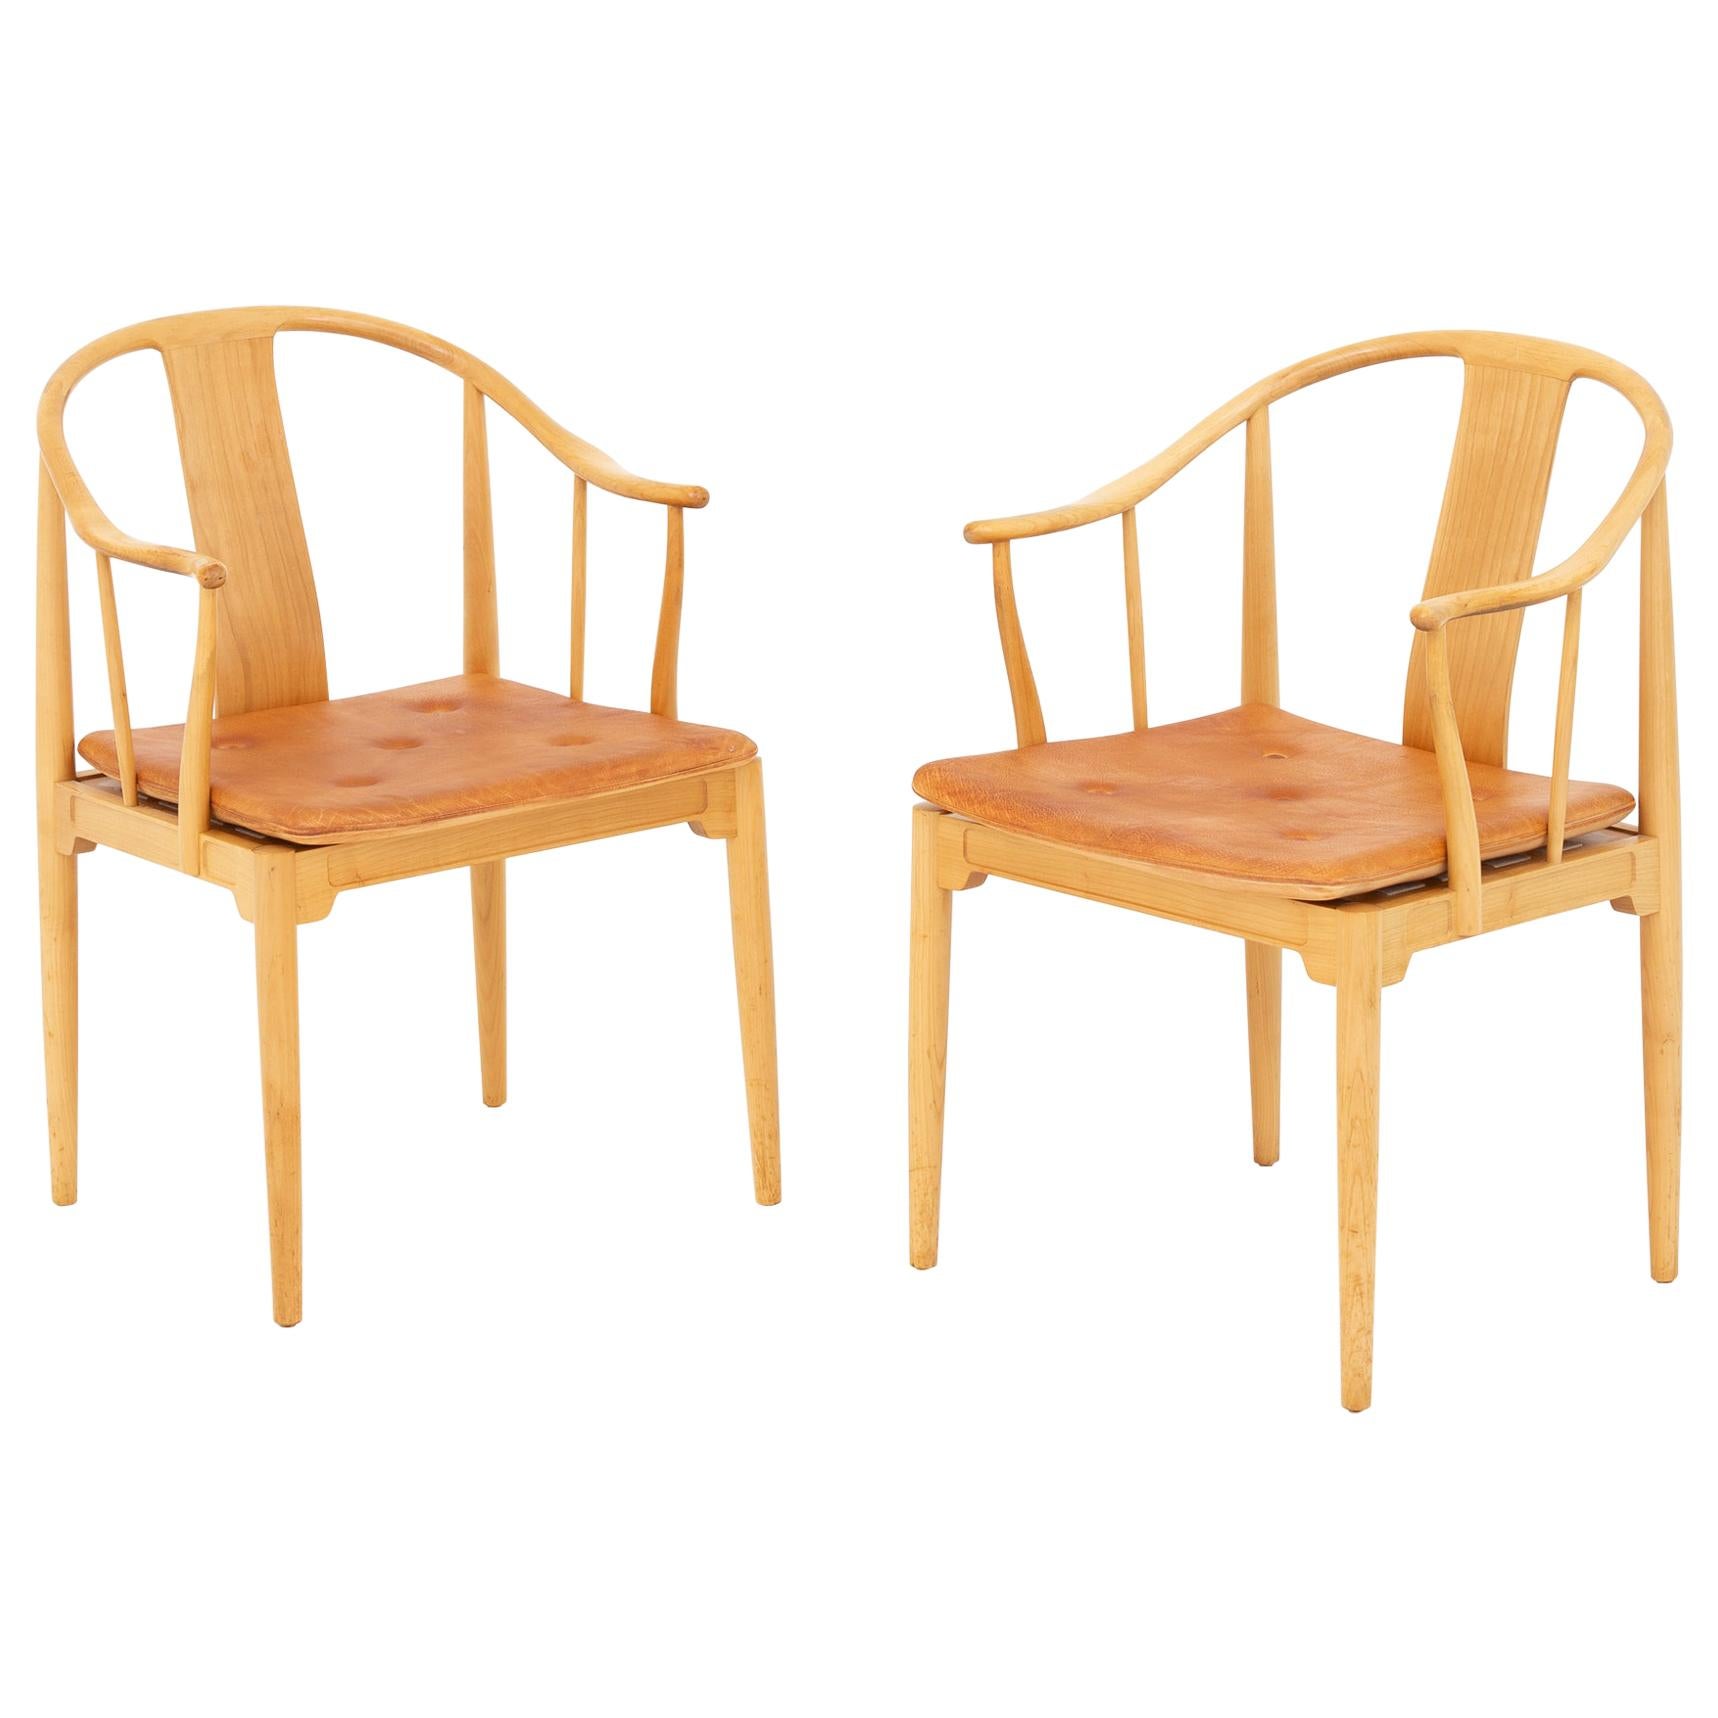 Pair of China Chairs by Hans J. Wegner